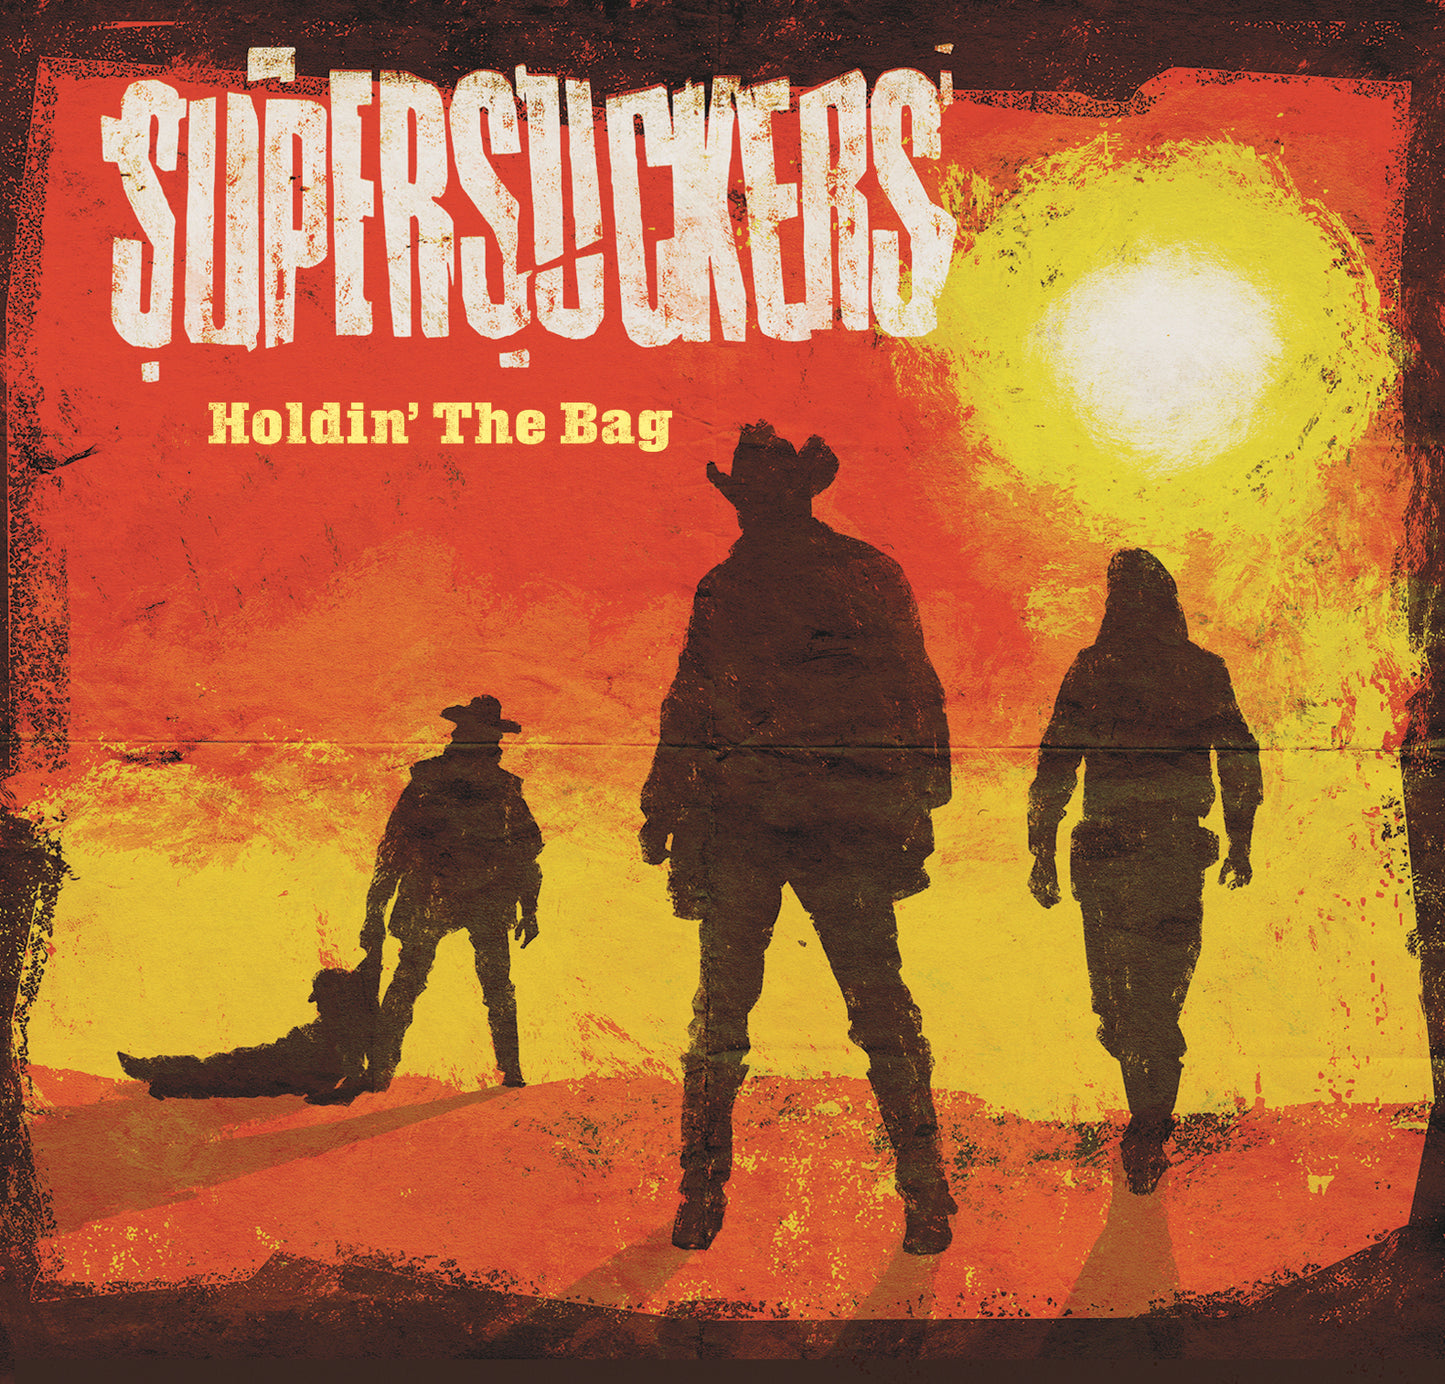 Supersuckers "Holdin' The Bag" CD